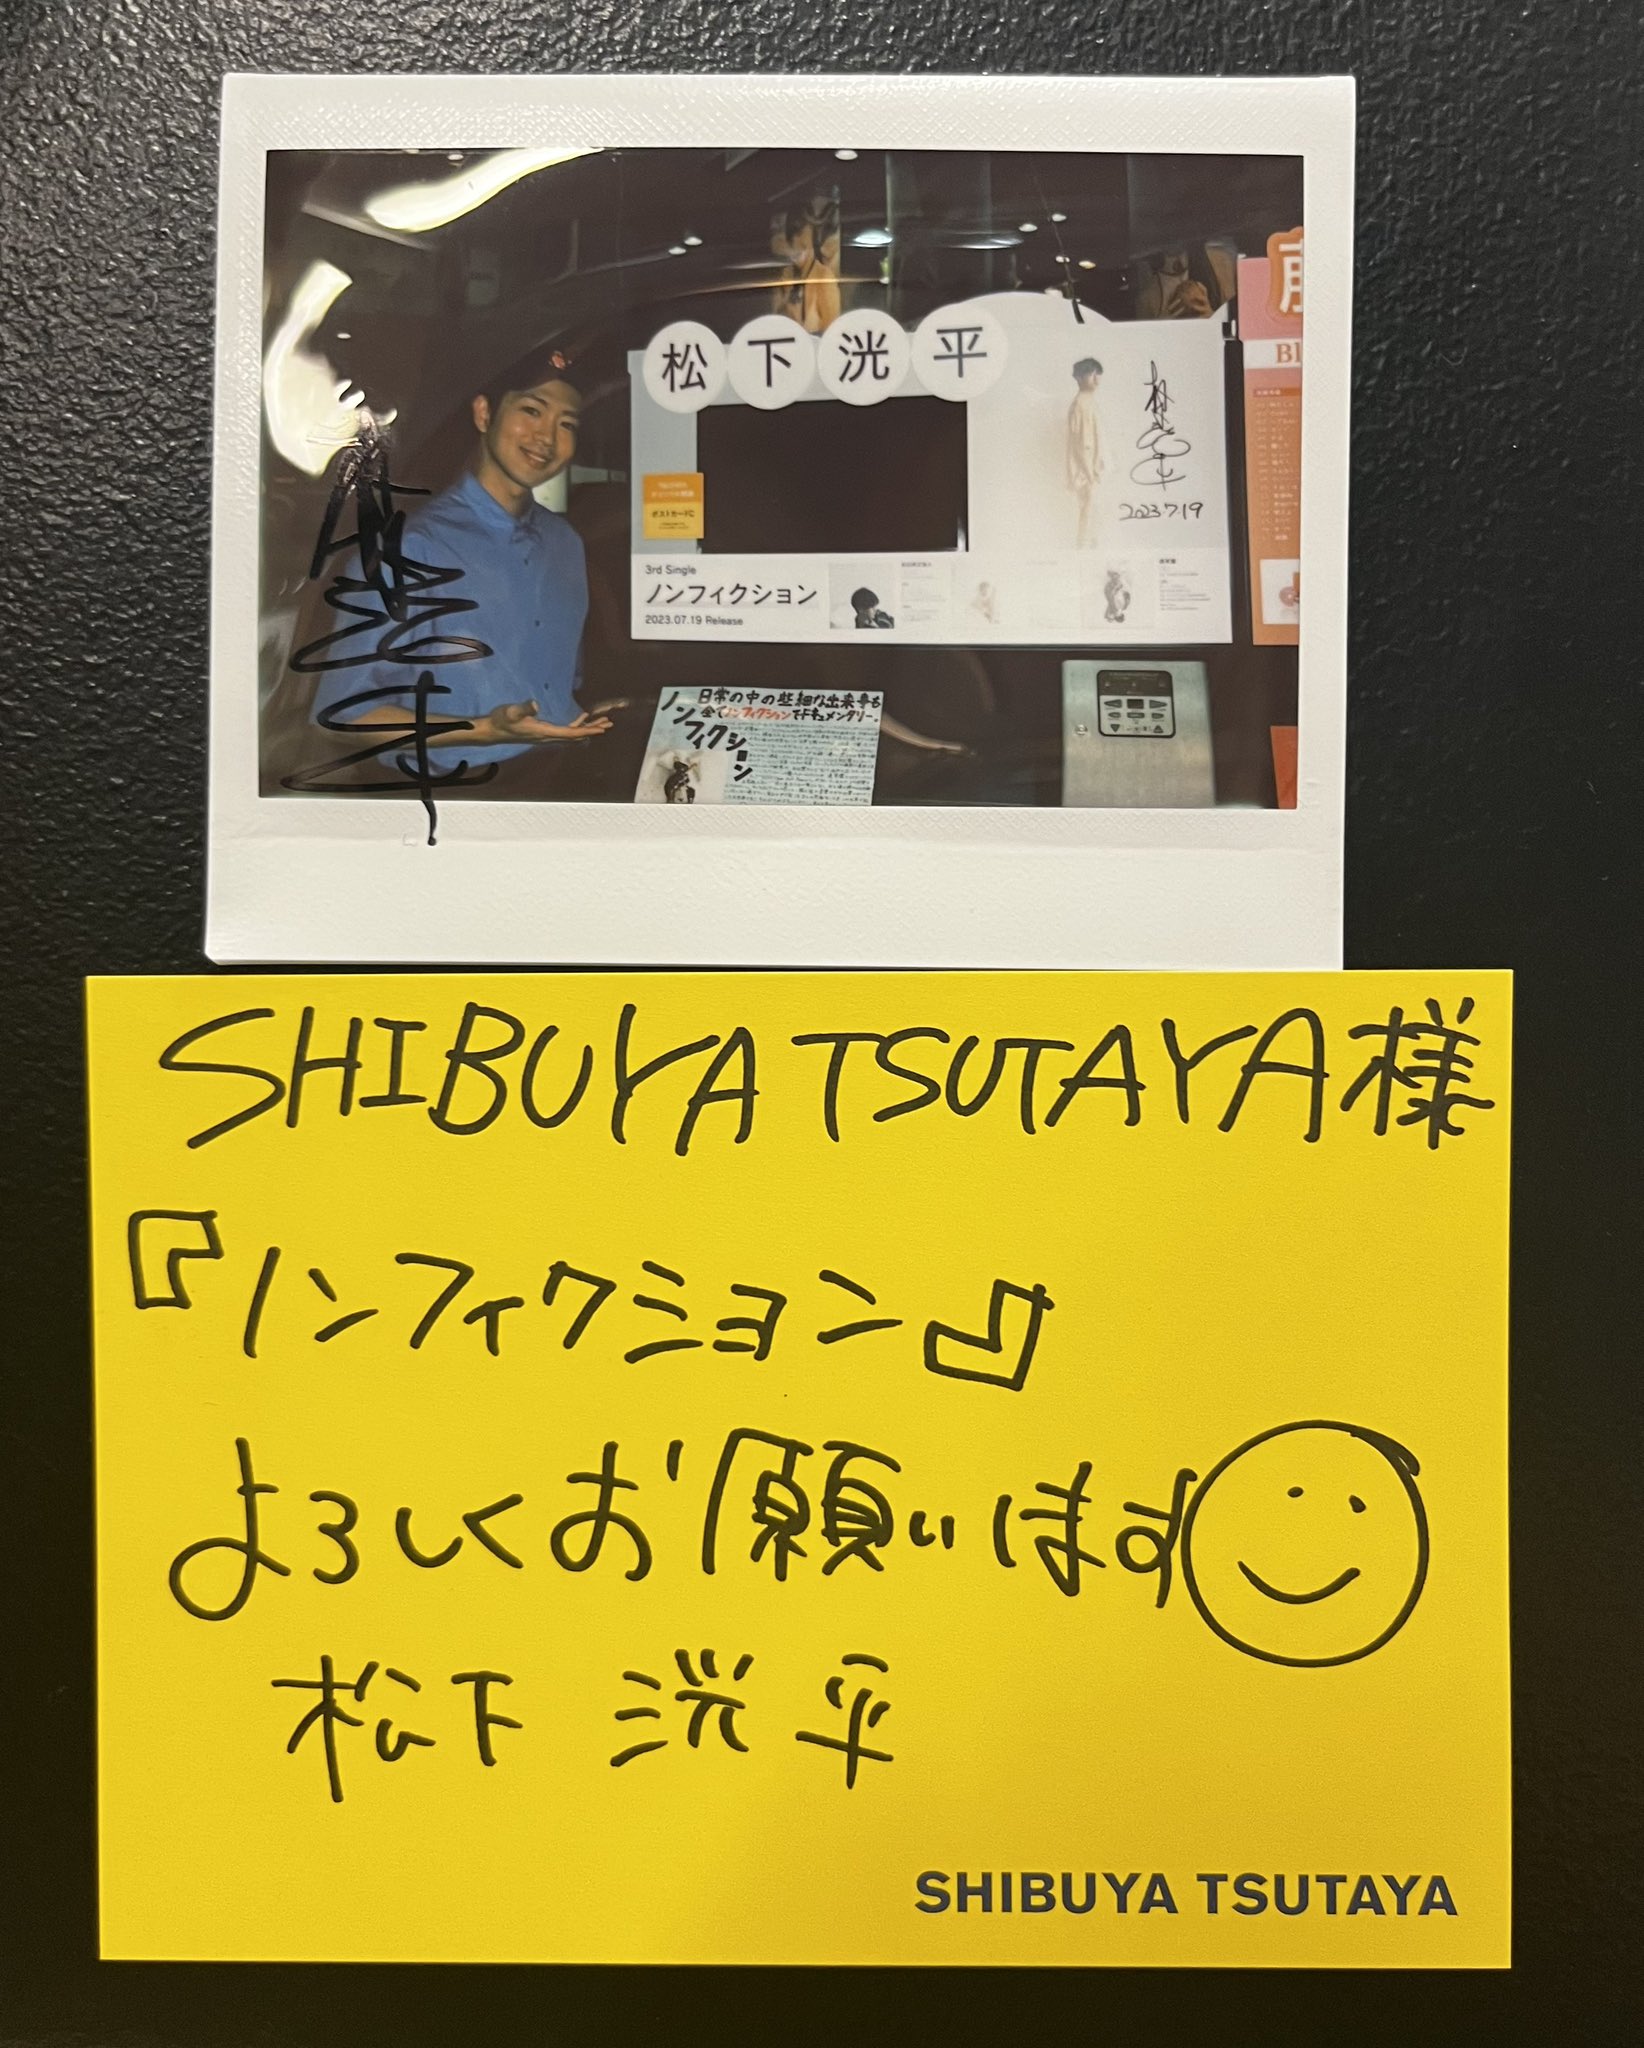 SHIBUYA TSUTAYA MUSIC/MOVIE(シブツタ) on X: 